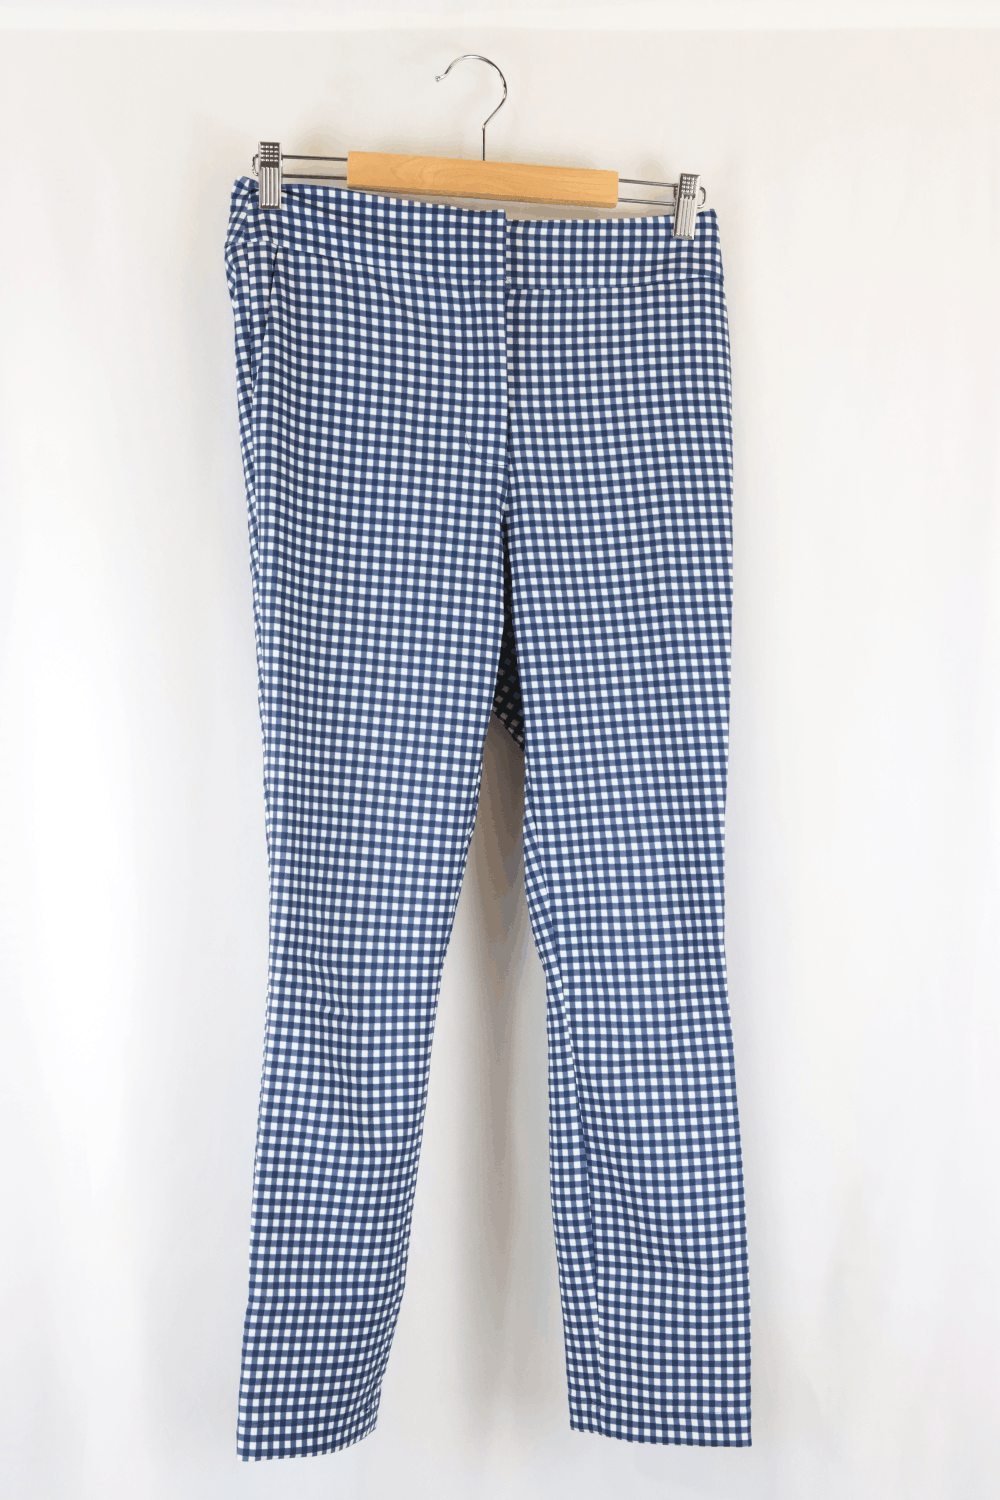 Tokito Blue And White Striped Pants S